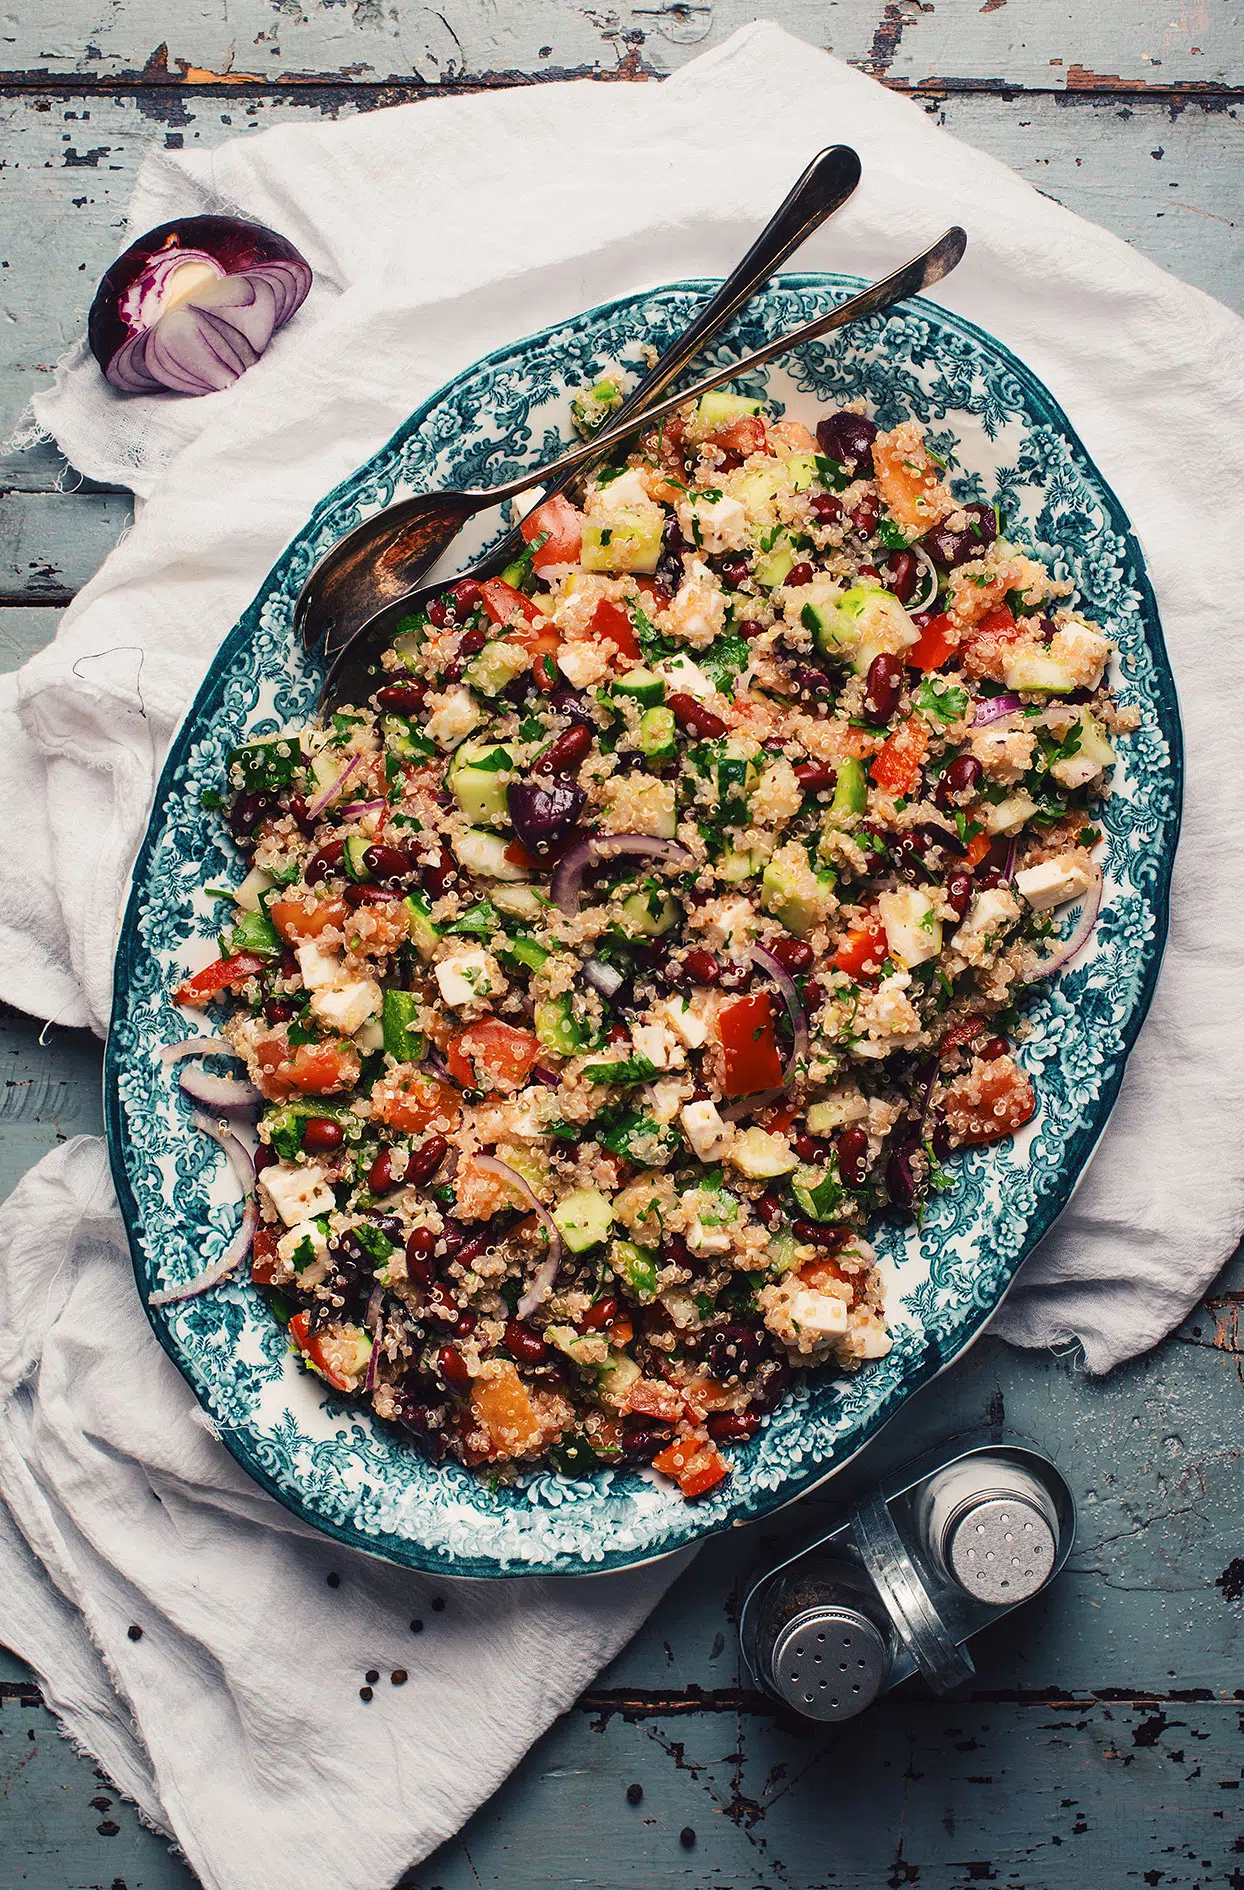 Greek salad with quinoa